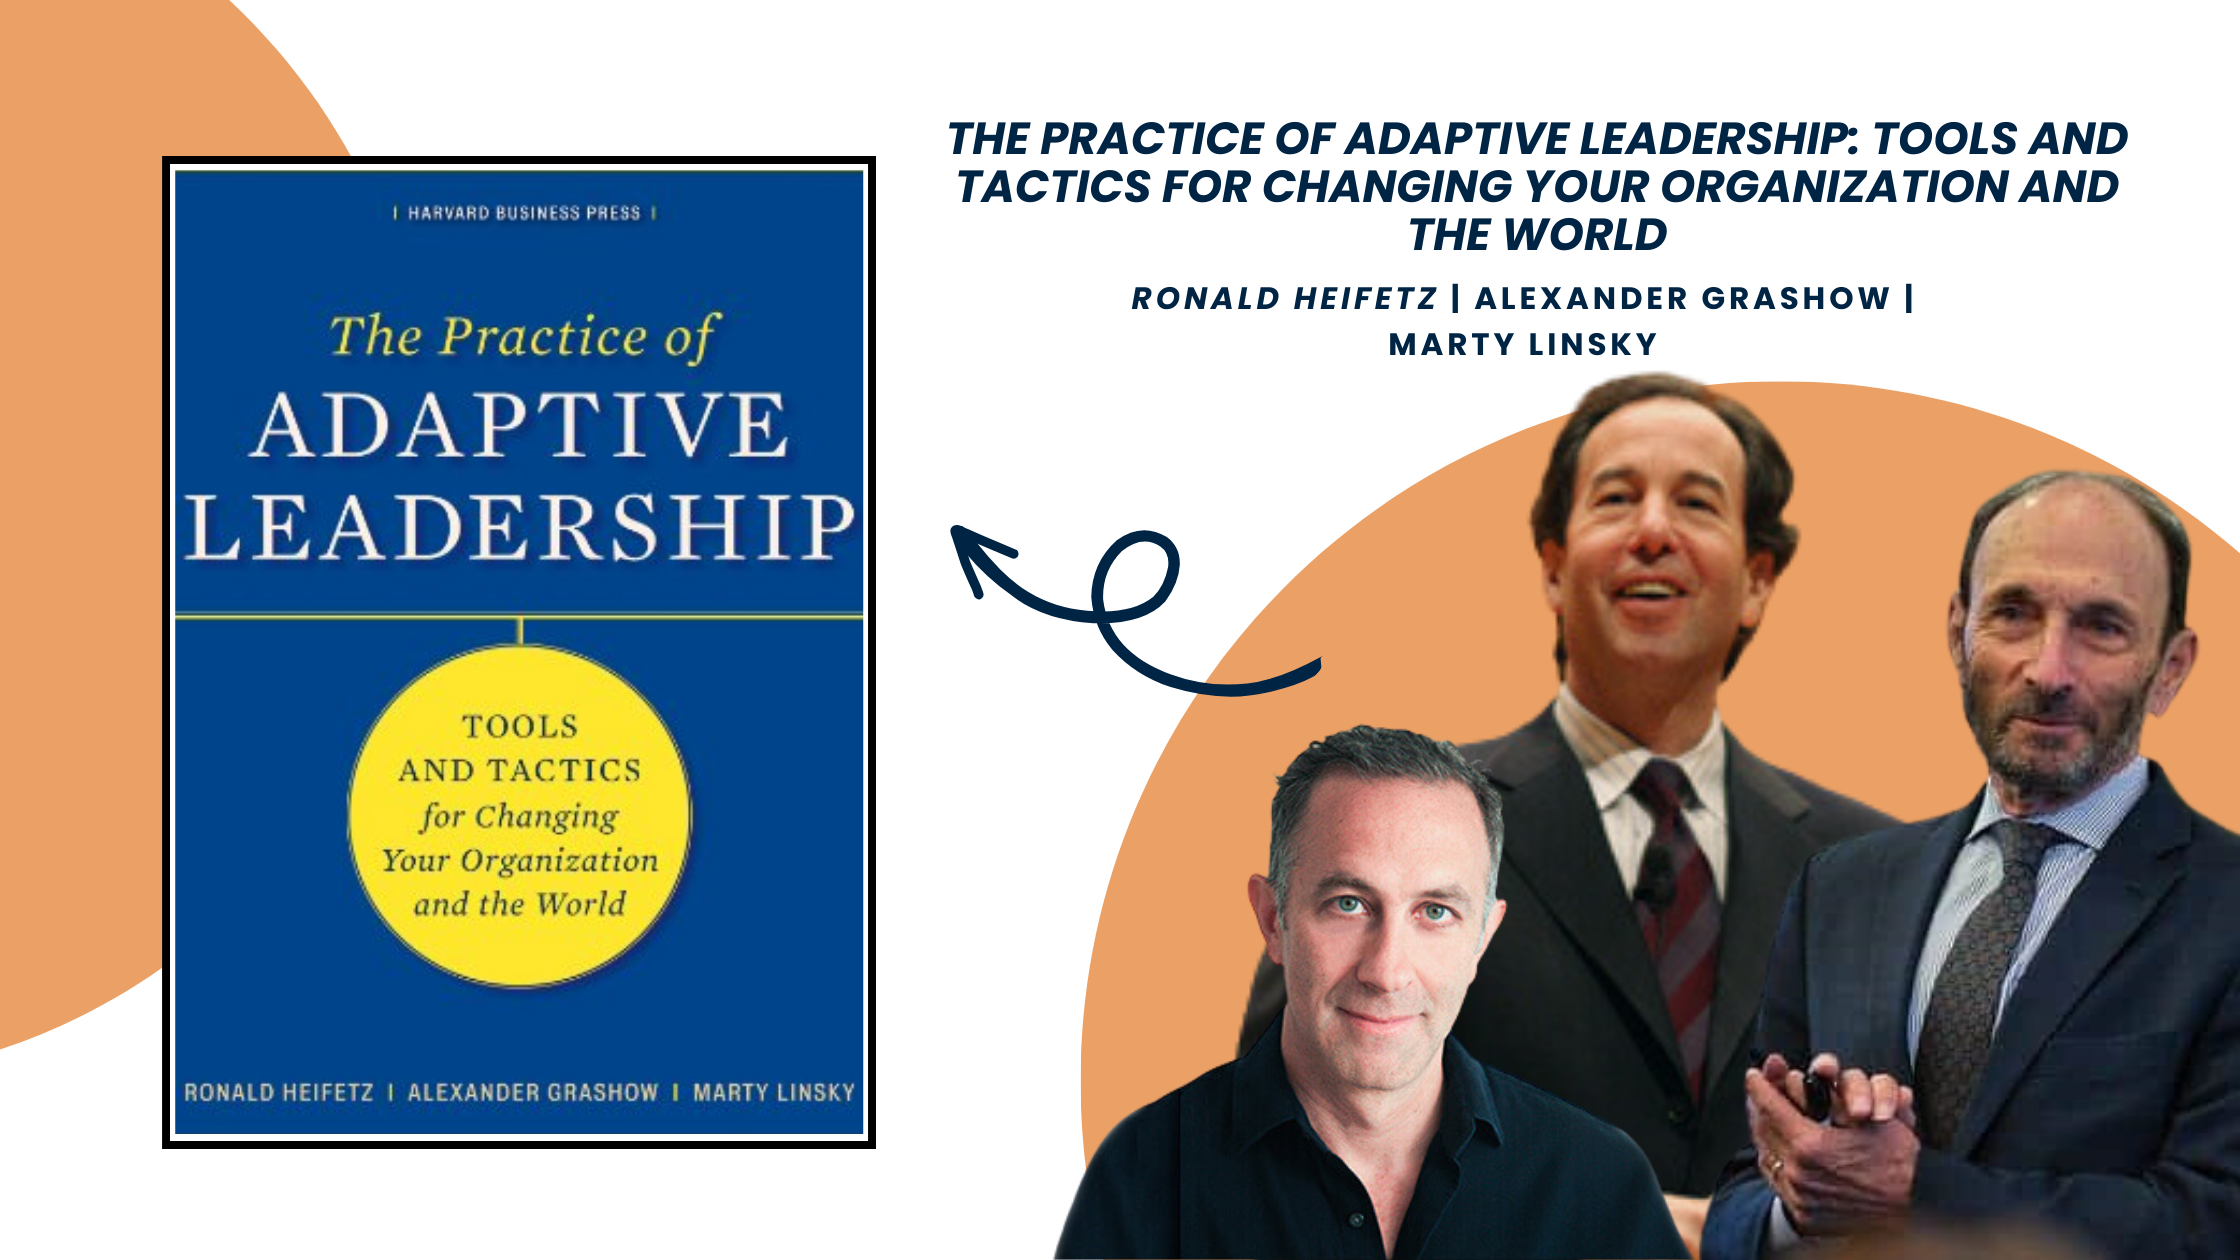 The practice of adaptive leadership